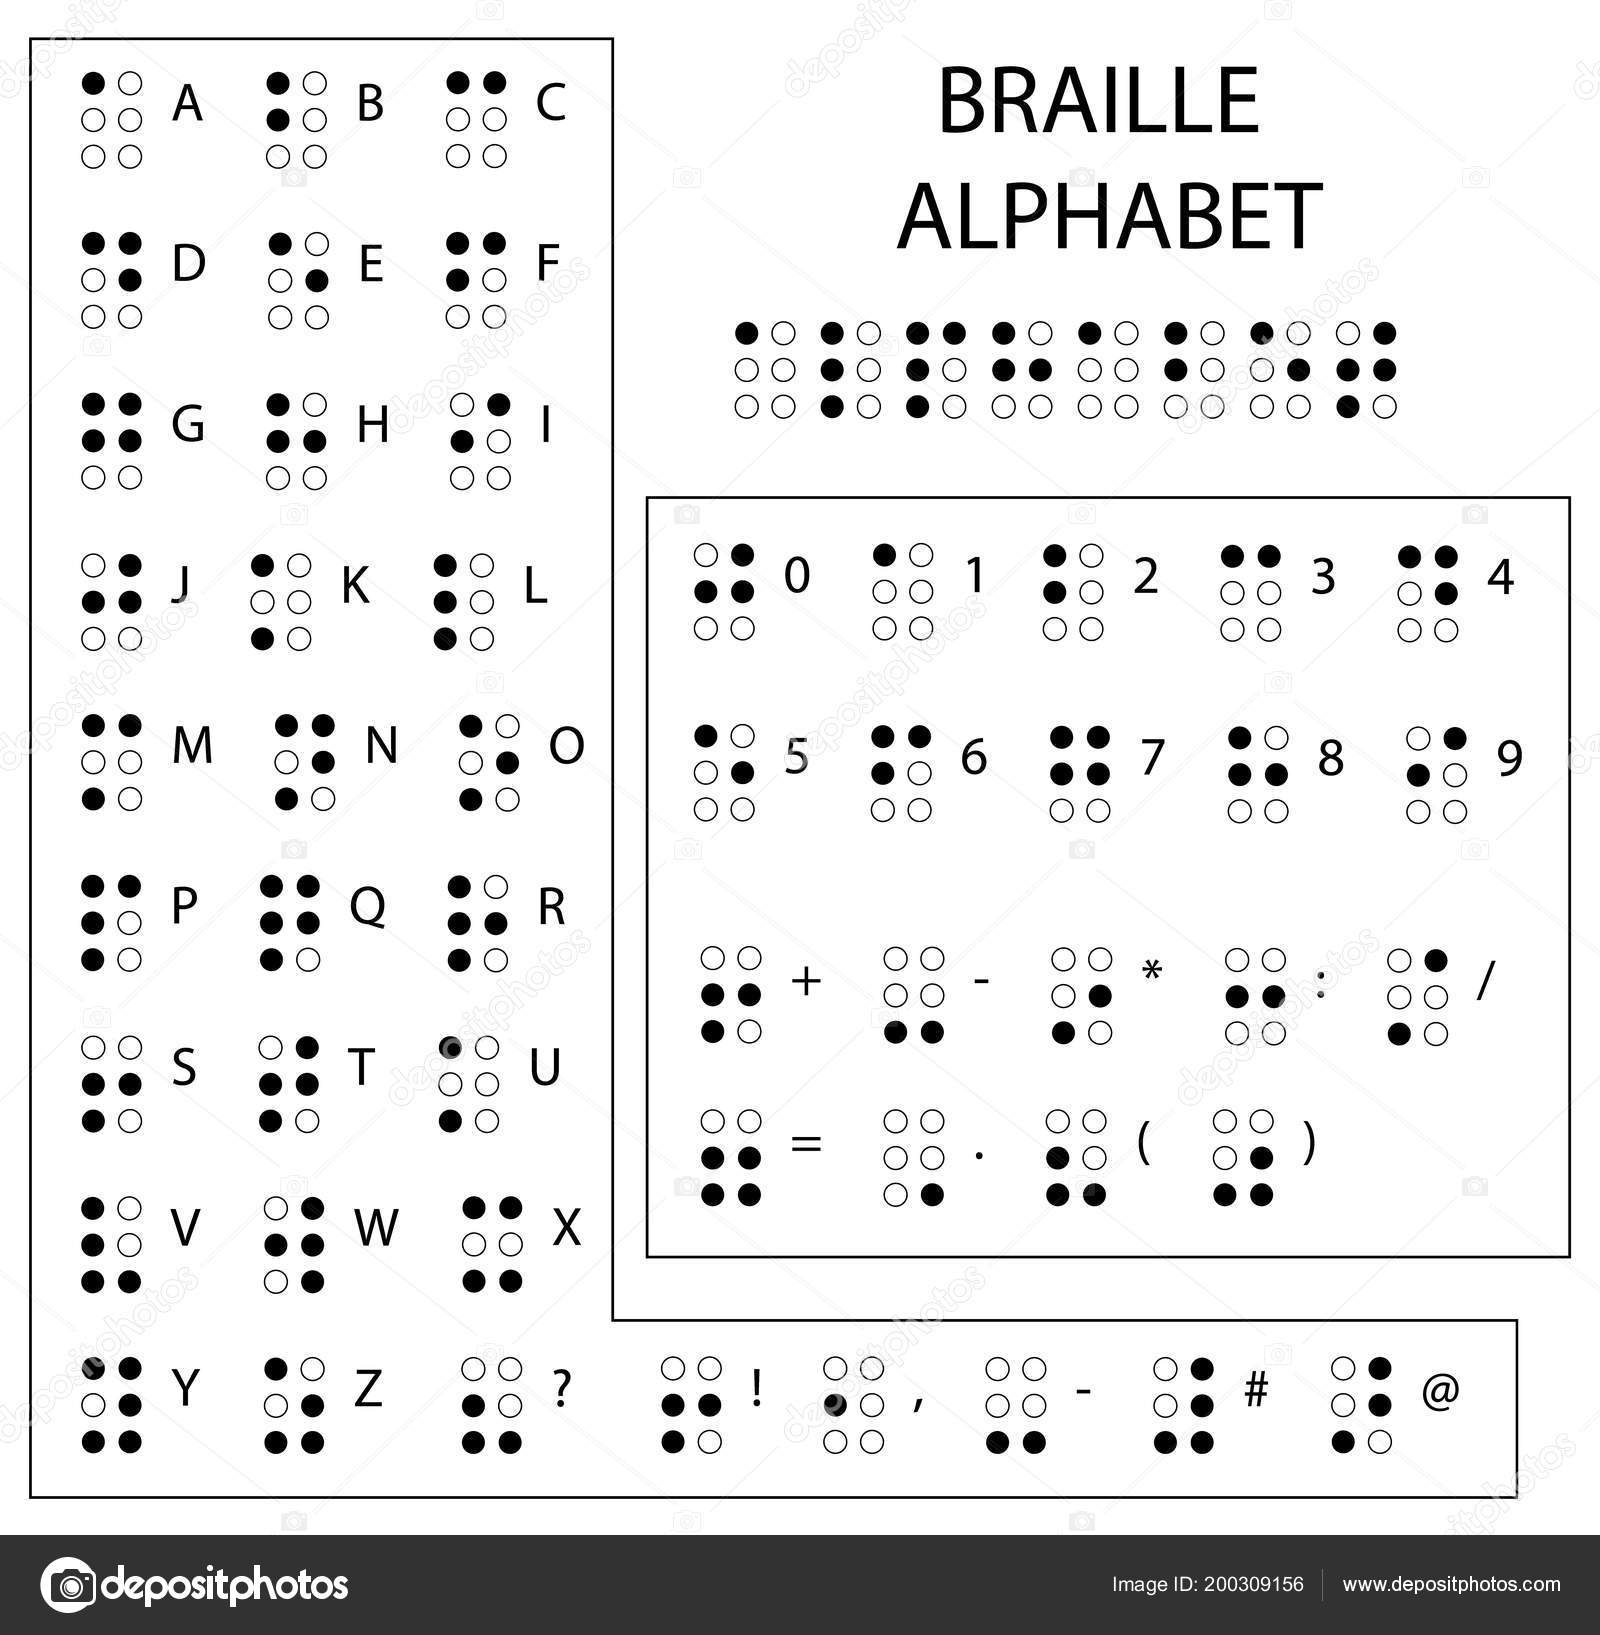 Braille Chart Of Alphabet Reversed Slate Stylus Braille Alphabet Images